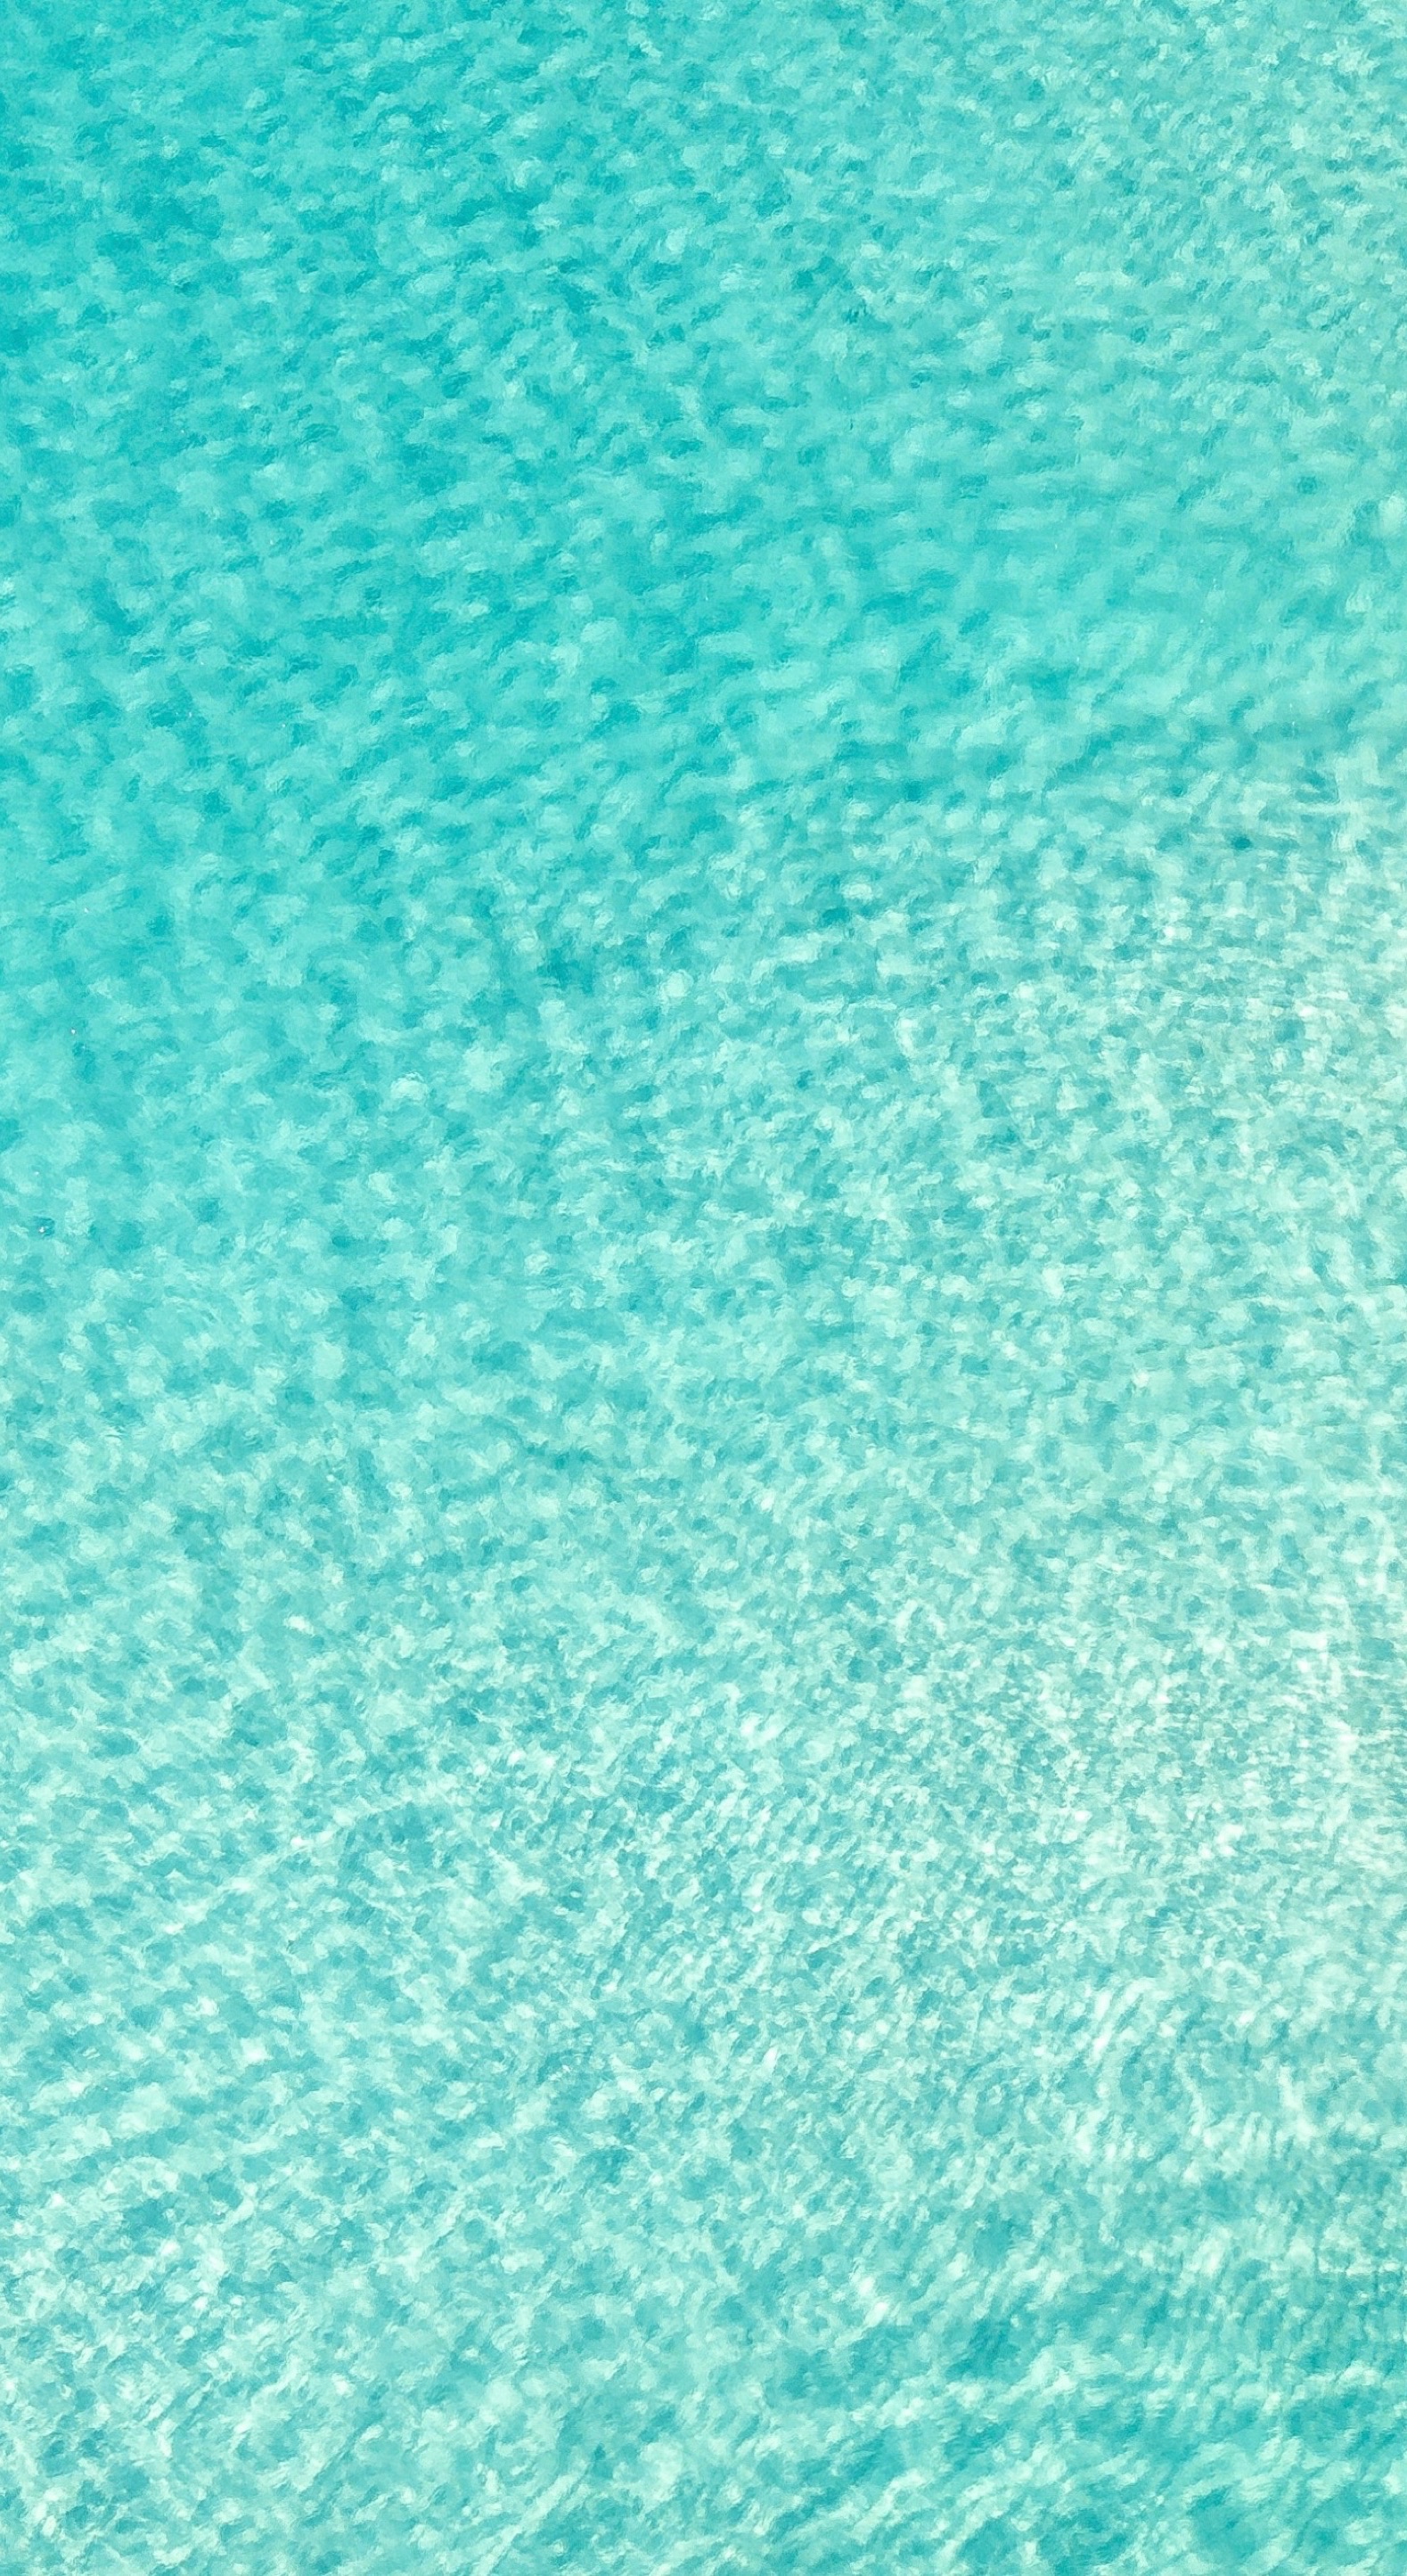 coole iphone wallpaper,blau,aqua,türkis,grün,blaugrün